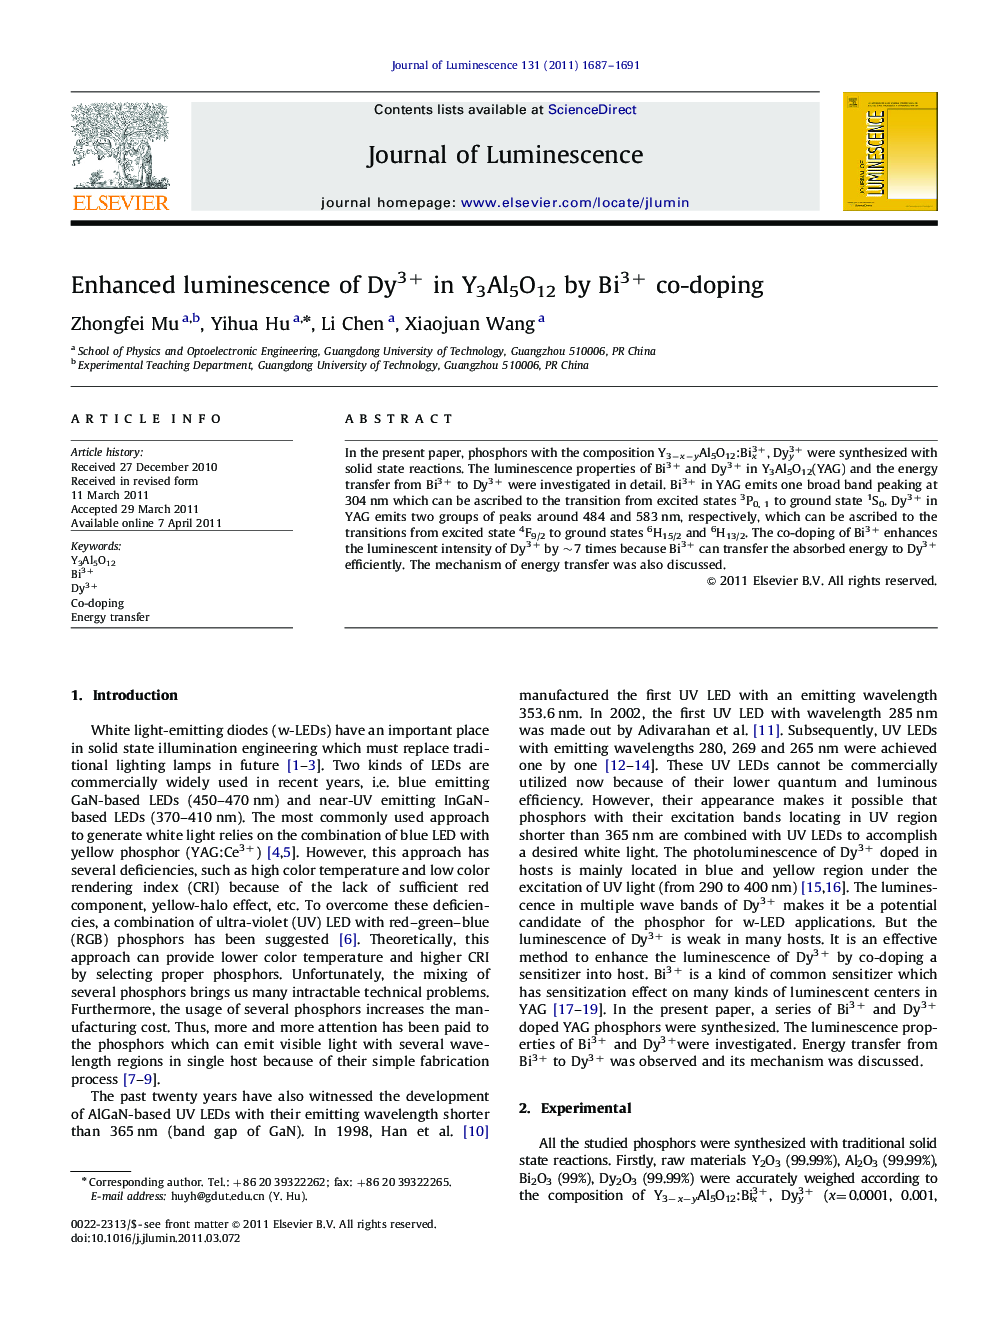 Enhanced luminescence of Dy3+ in Y3Al5O12 by Bi3+ co-doping